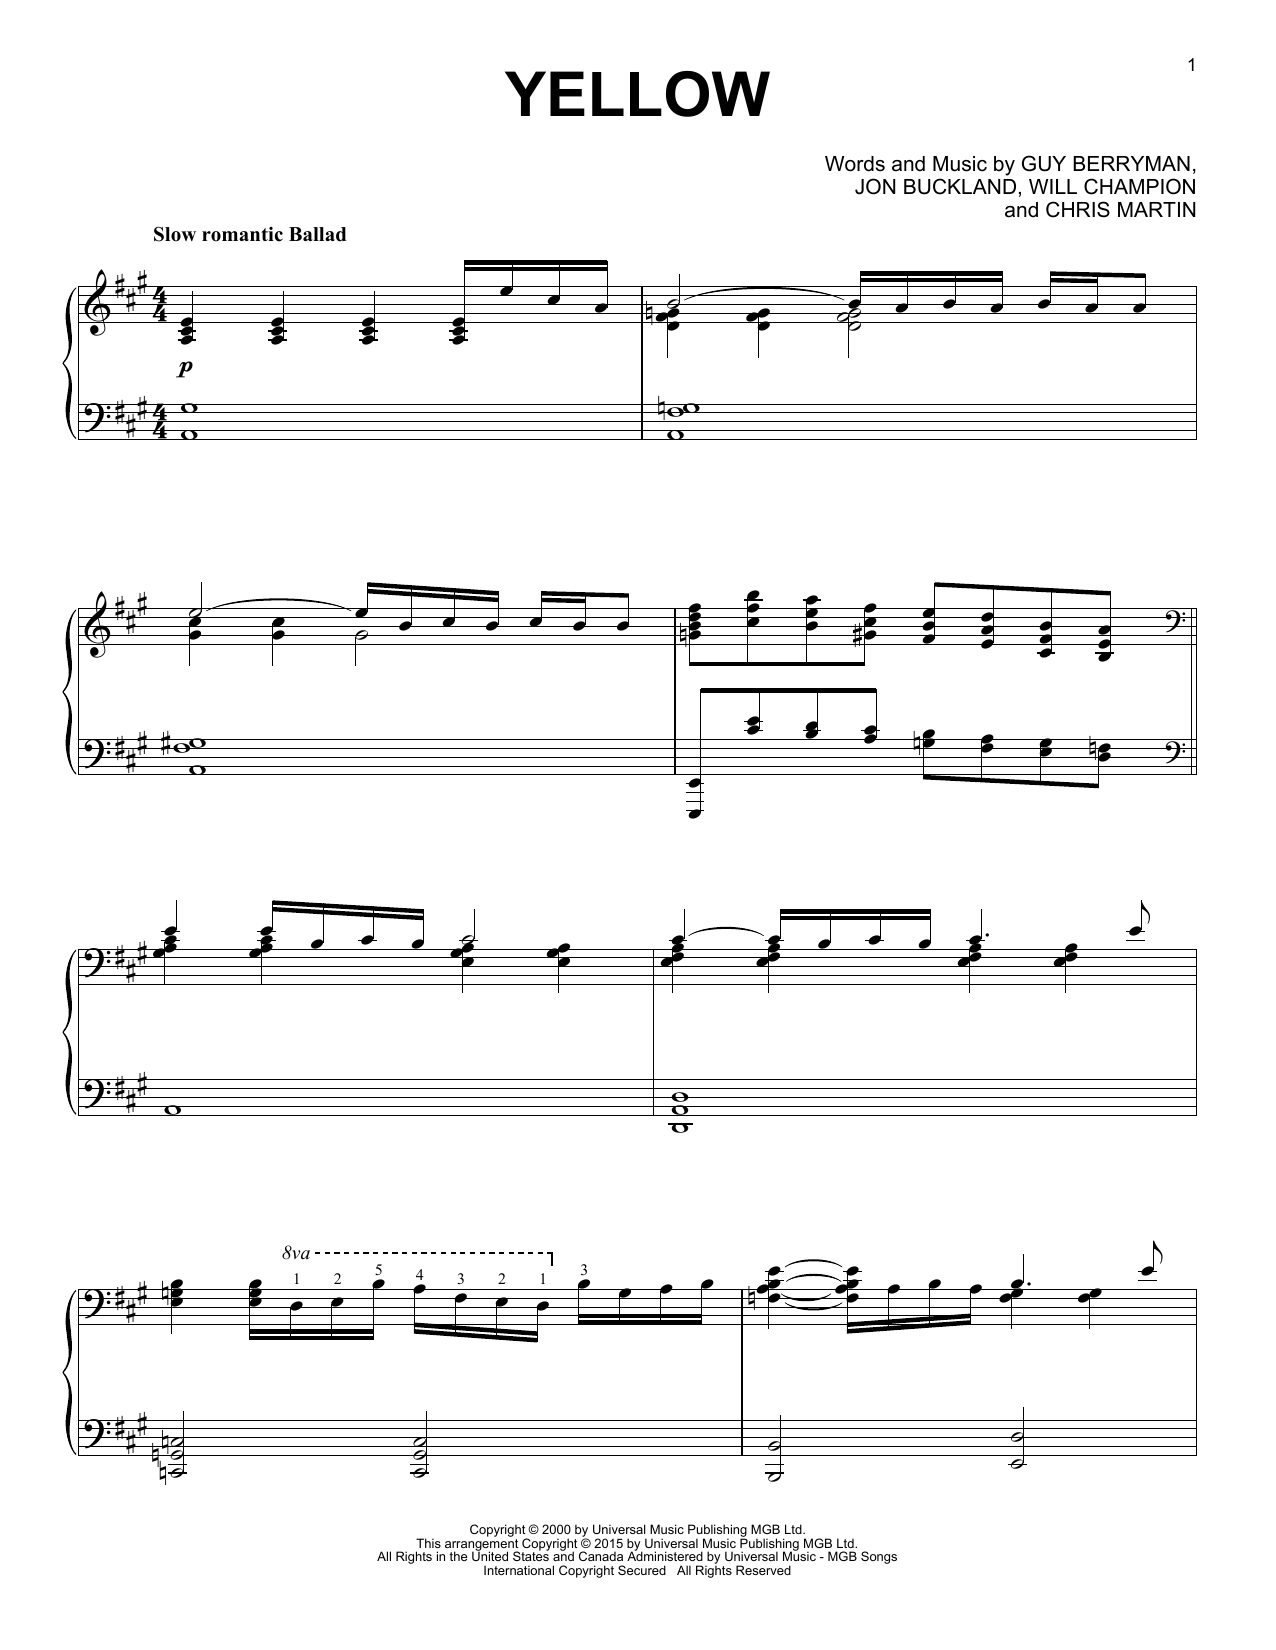 Coldplay "Yellow [Jazz version]" Sheet Music PDF Notes, Chords Alternative Score Piano Solo Download Printable. SKU: 161922